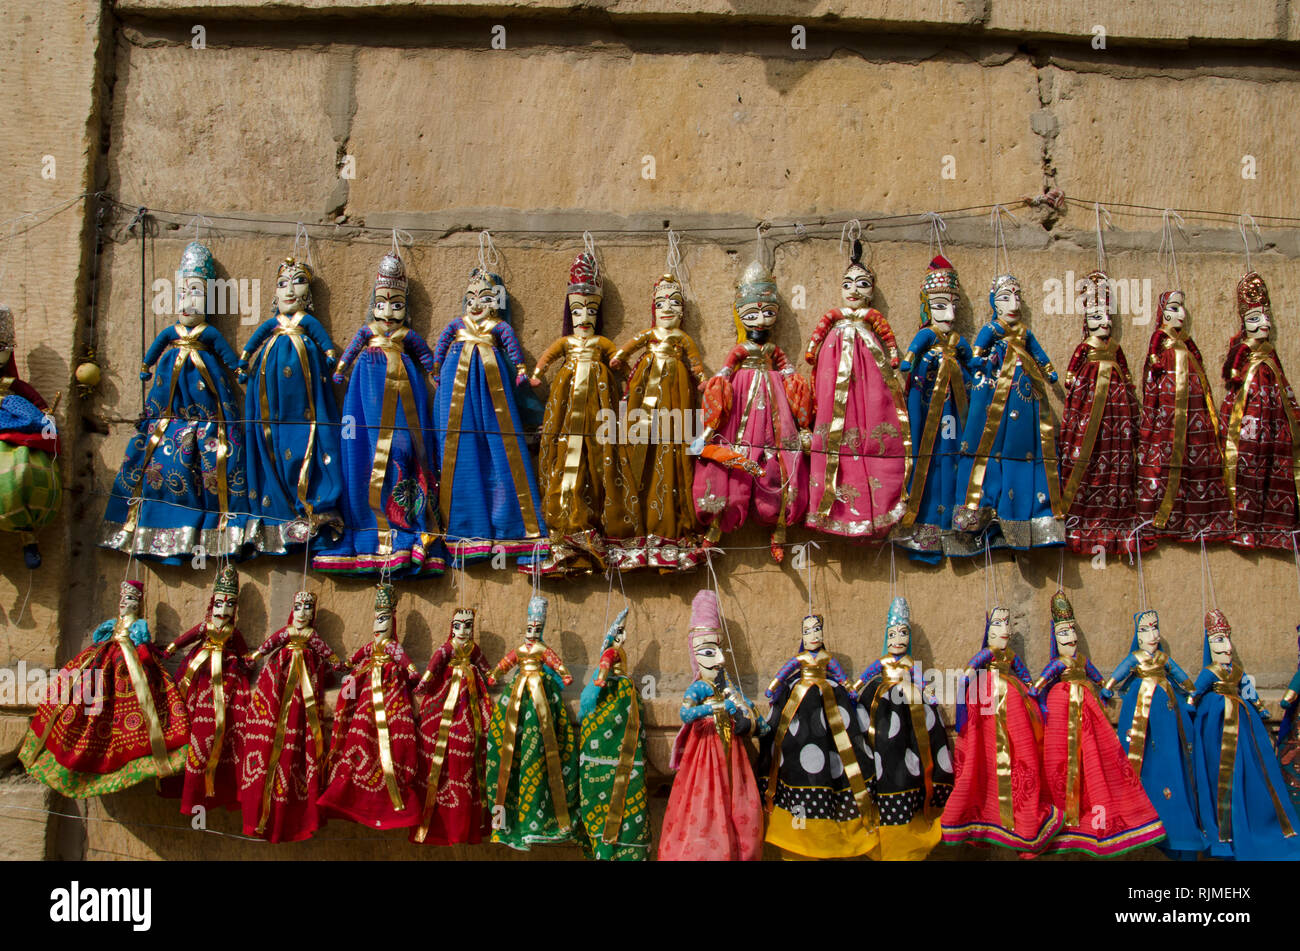 Colorful Kathputli or Puppets displayed on the wall, near Patwon Ki Haveli, Jaisalmer, Rajasthan, India Stock Photo